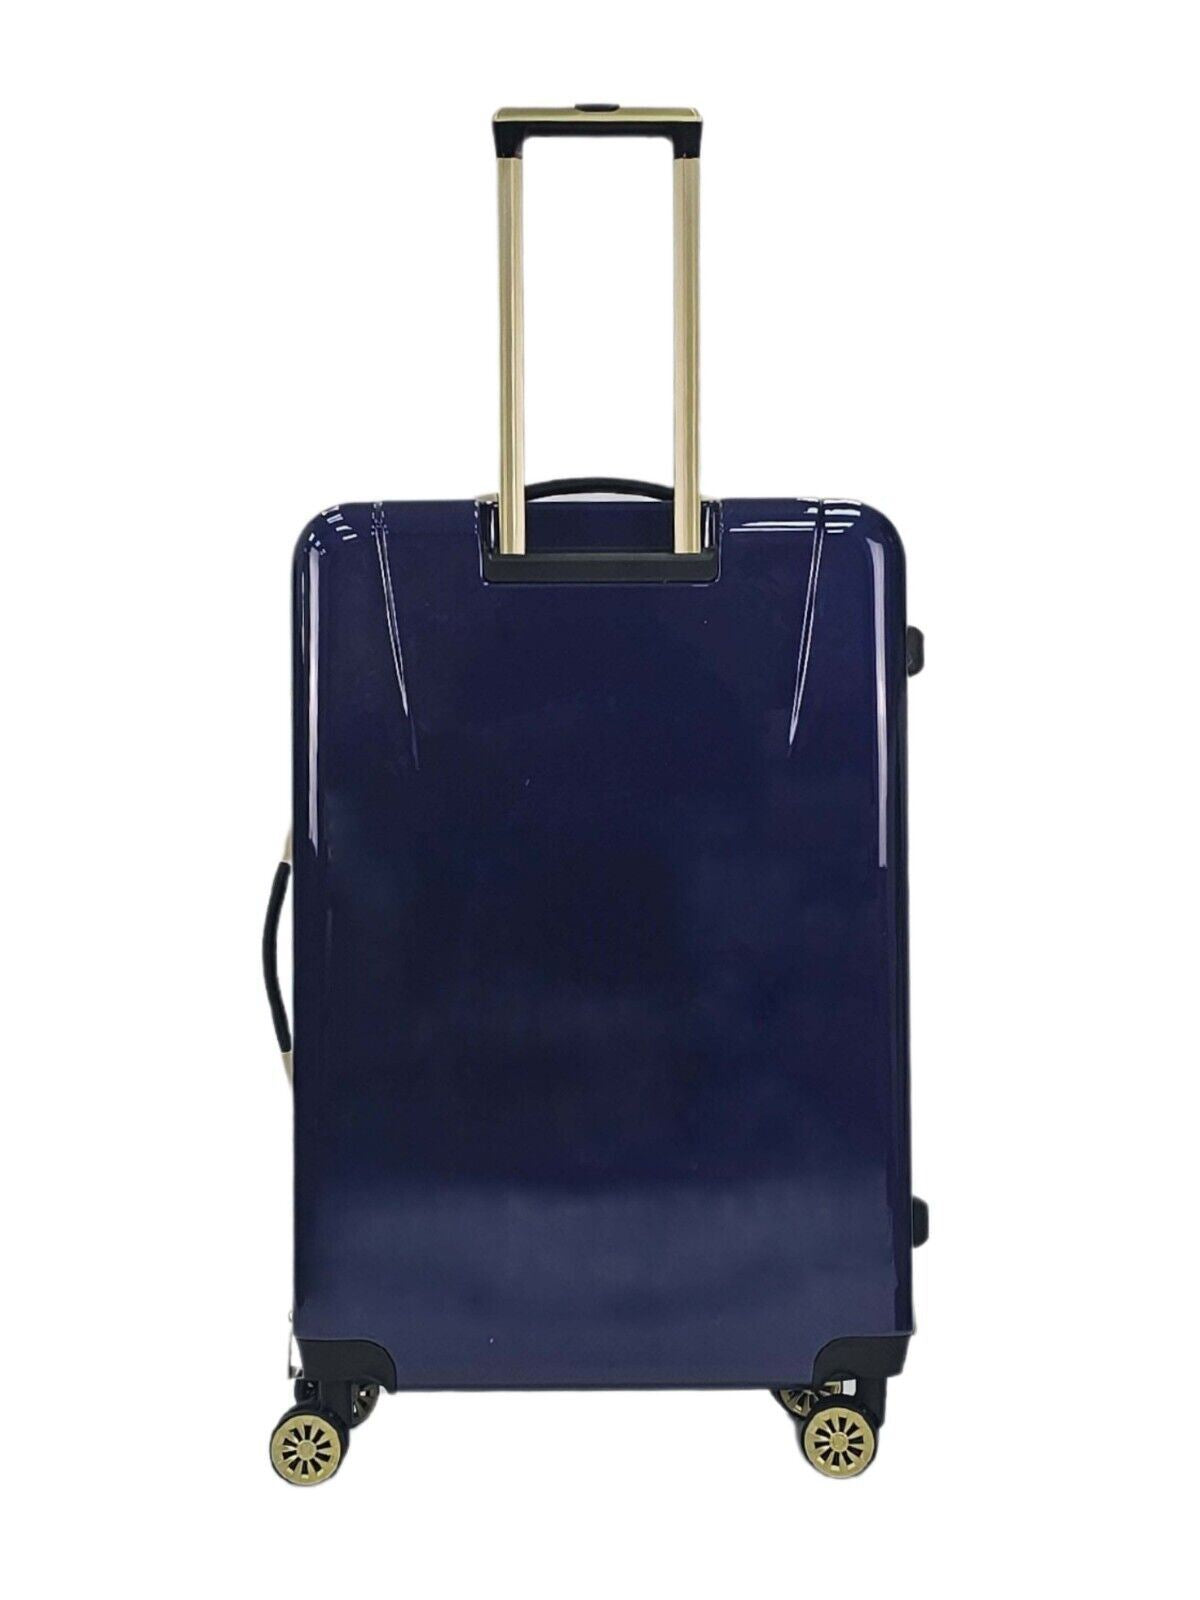 Hard Shell Blue 4 Wheel Suitcase Flower Print Luggage Cabin